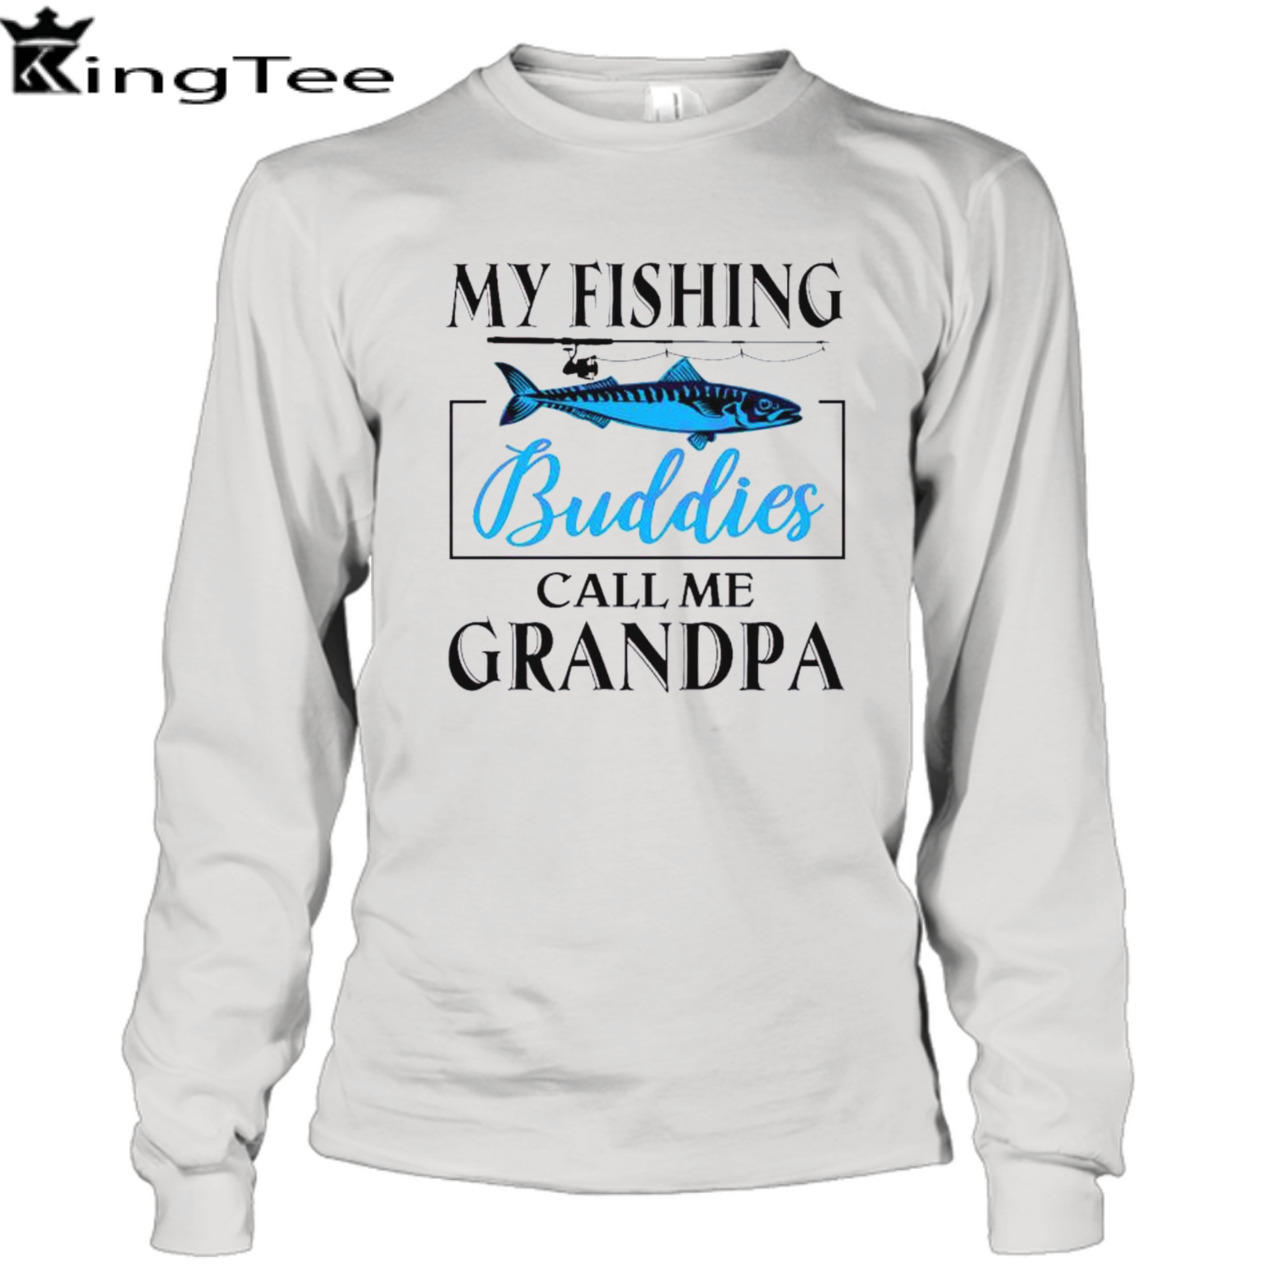 Fishing Buddies T-Shirt